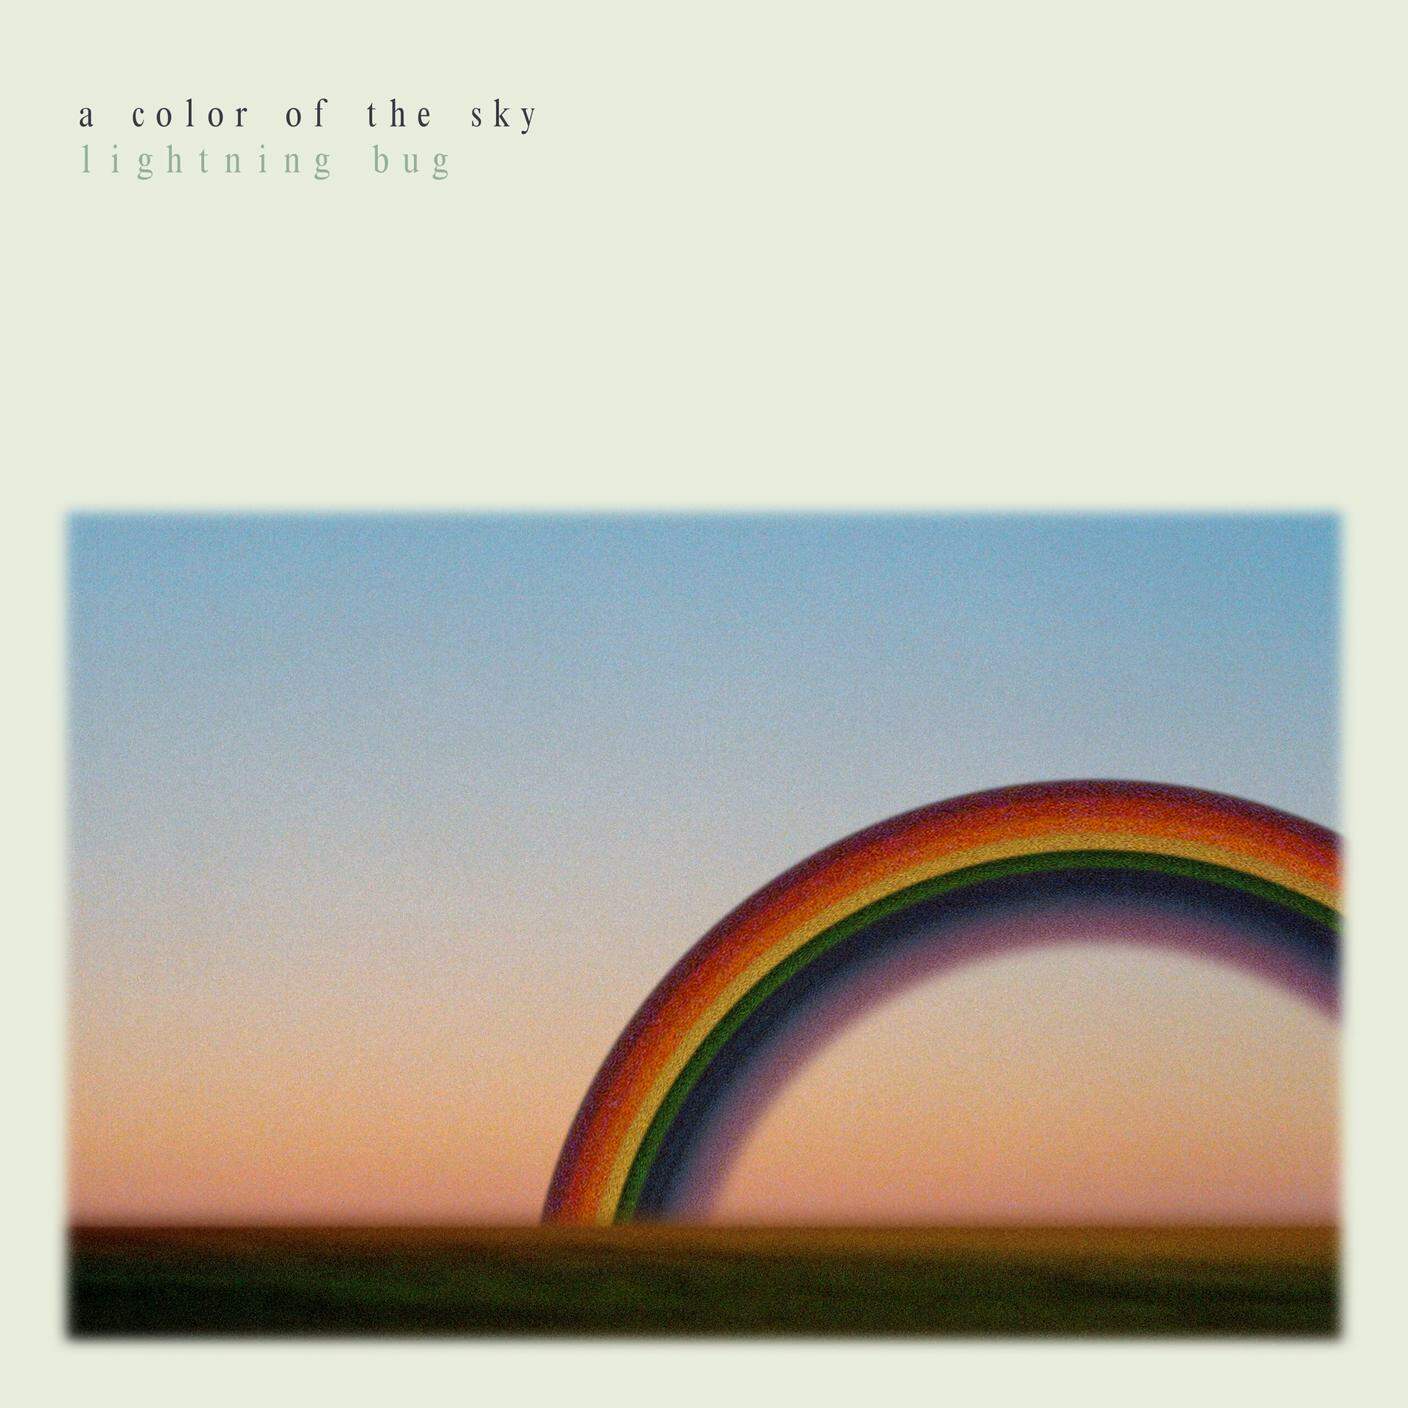 "A Color of the Sky" di Lightning Bug, Fat Possum Records (dettaglio di copertina)